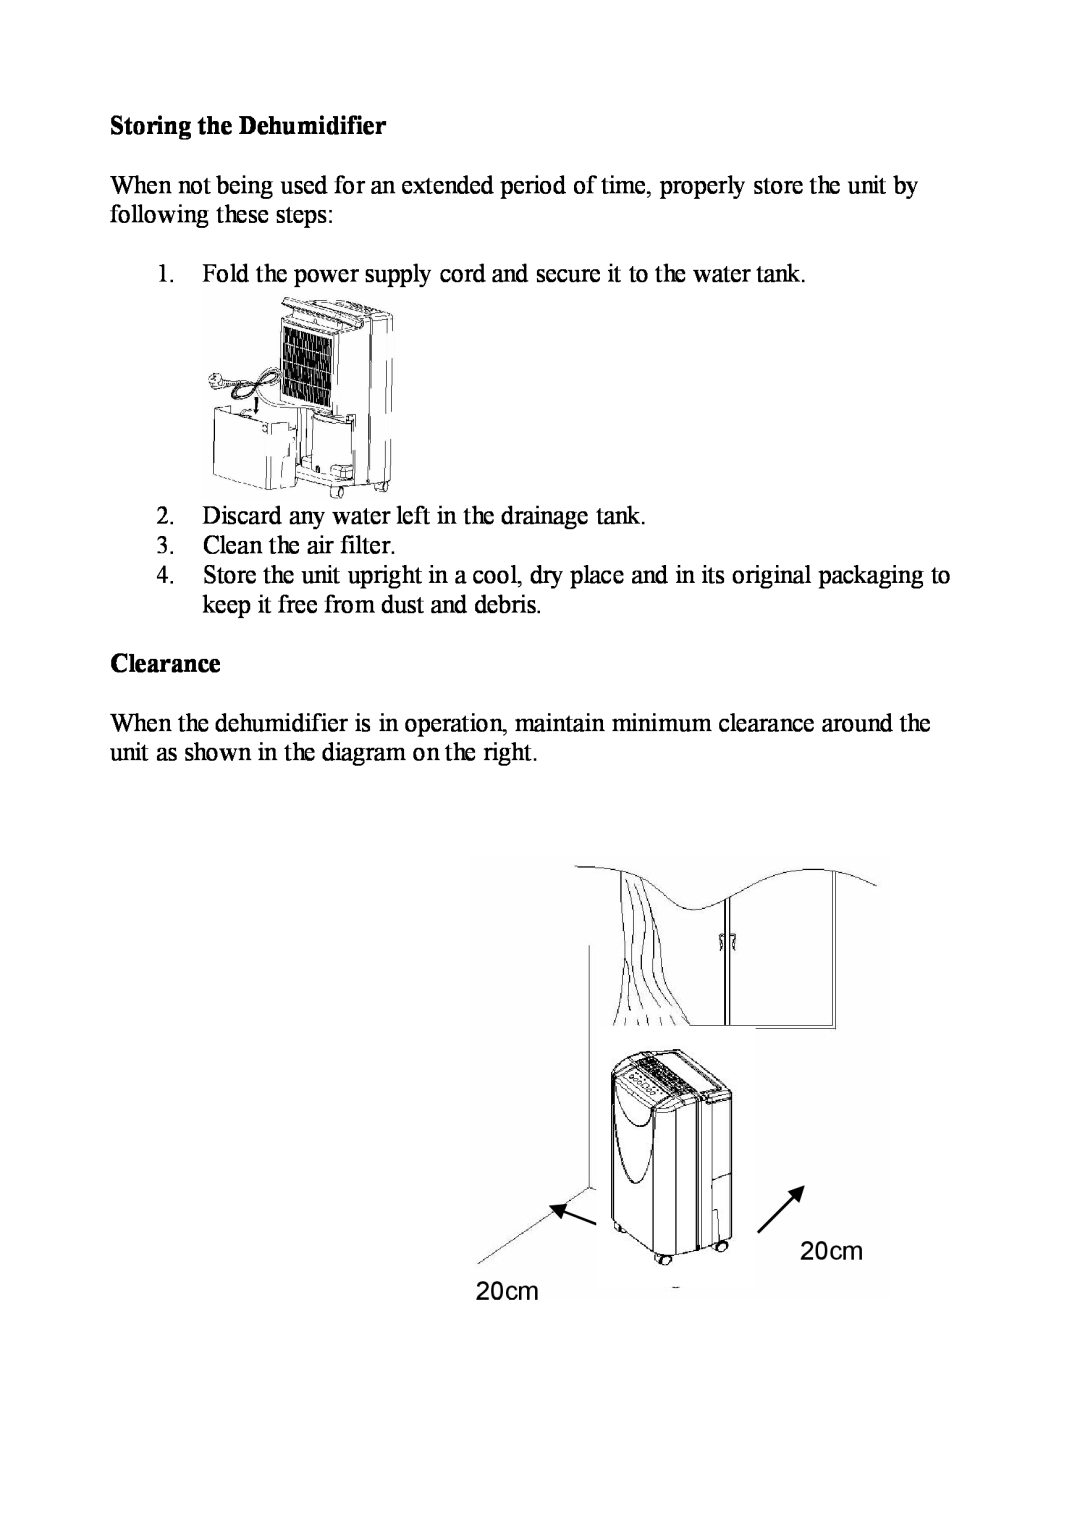 NewAir AD-400 manual Storing the Dehumidifier, Clearance, 20cm 20cm 